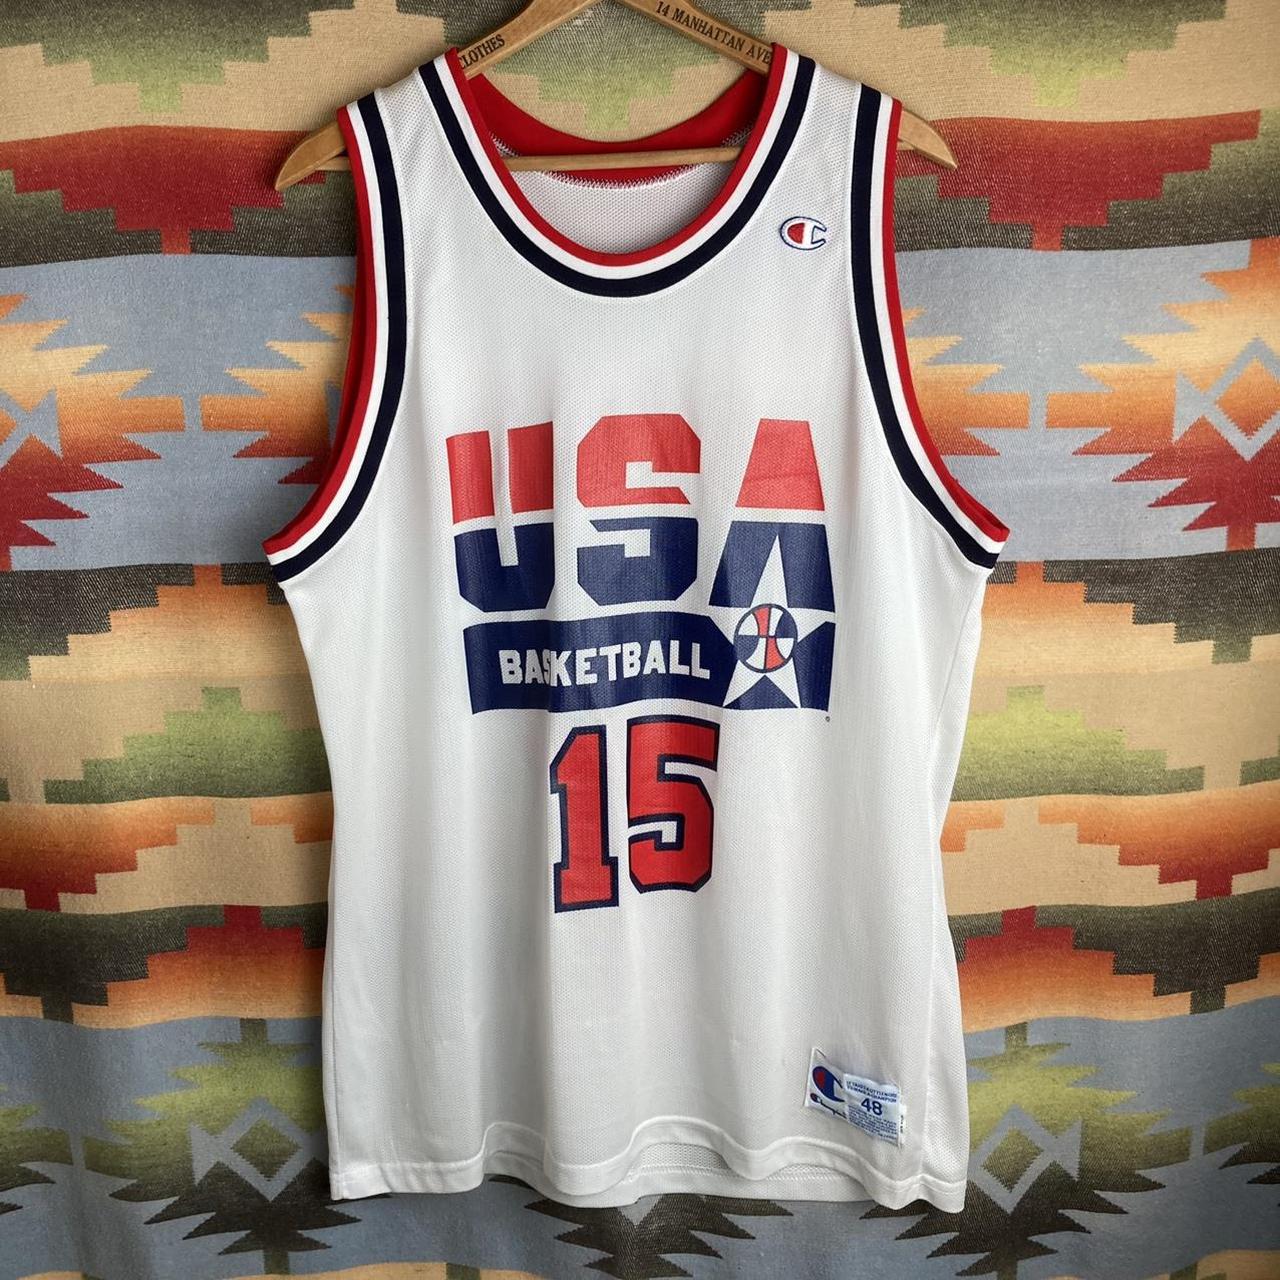 USA 1992 DREAM TEAM OLYMPICS BASKETBALL VINTAGE 1990'S CHAMPION